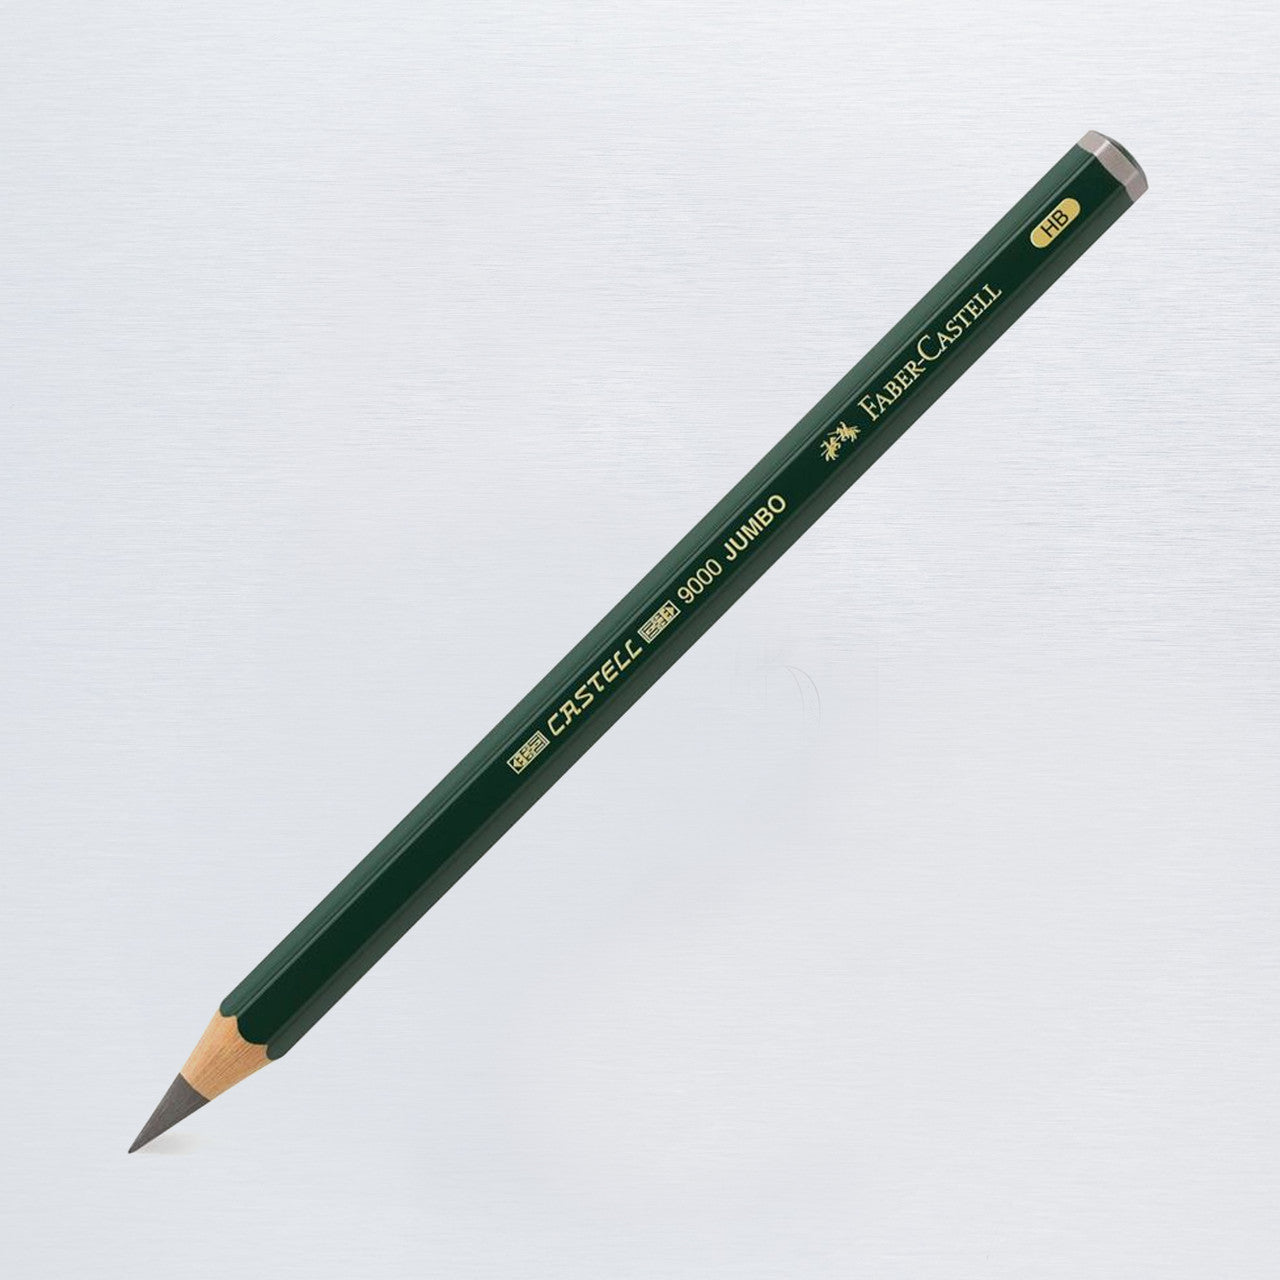 Jumbo pencil 9000